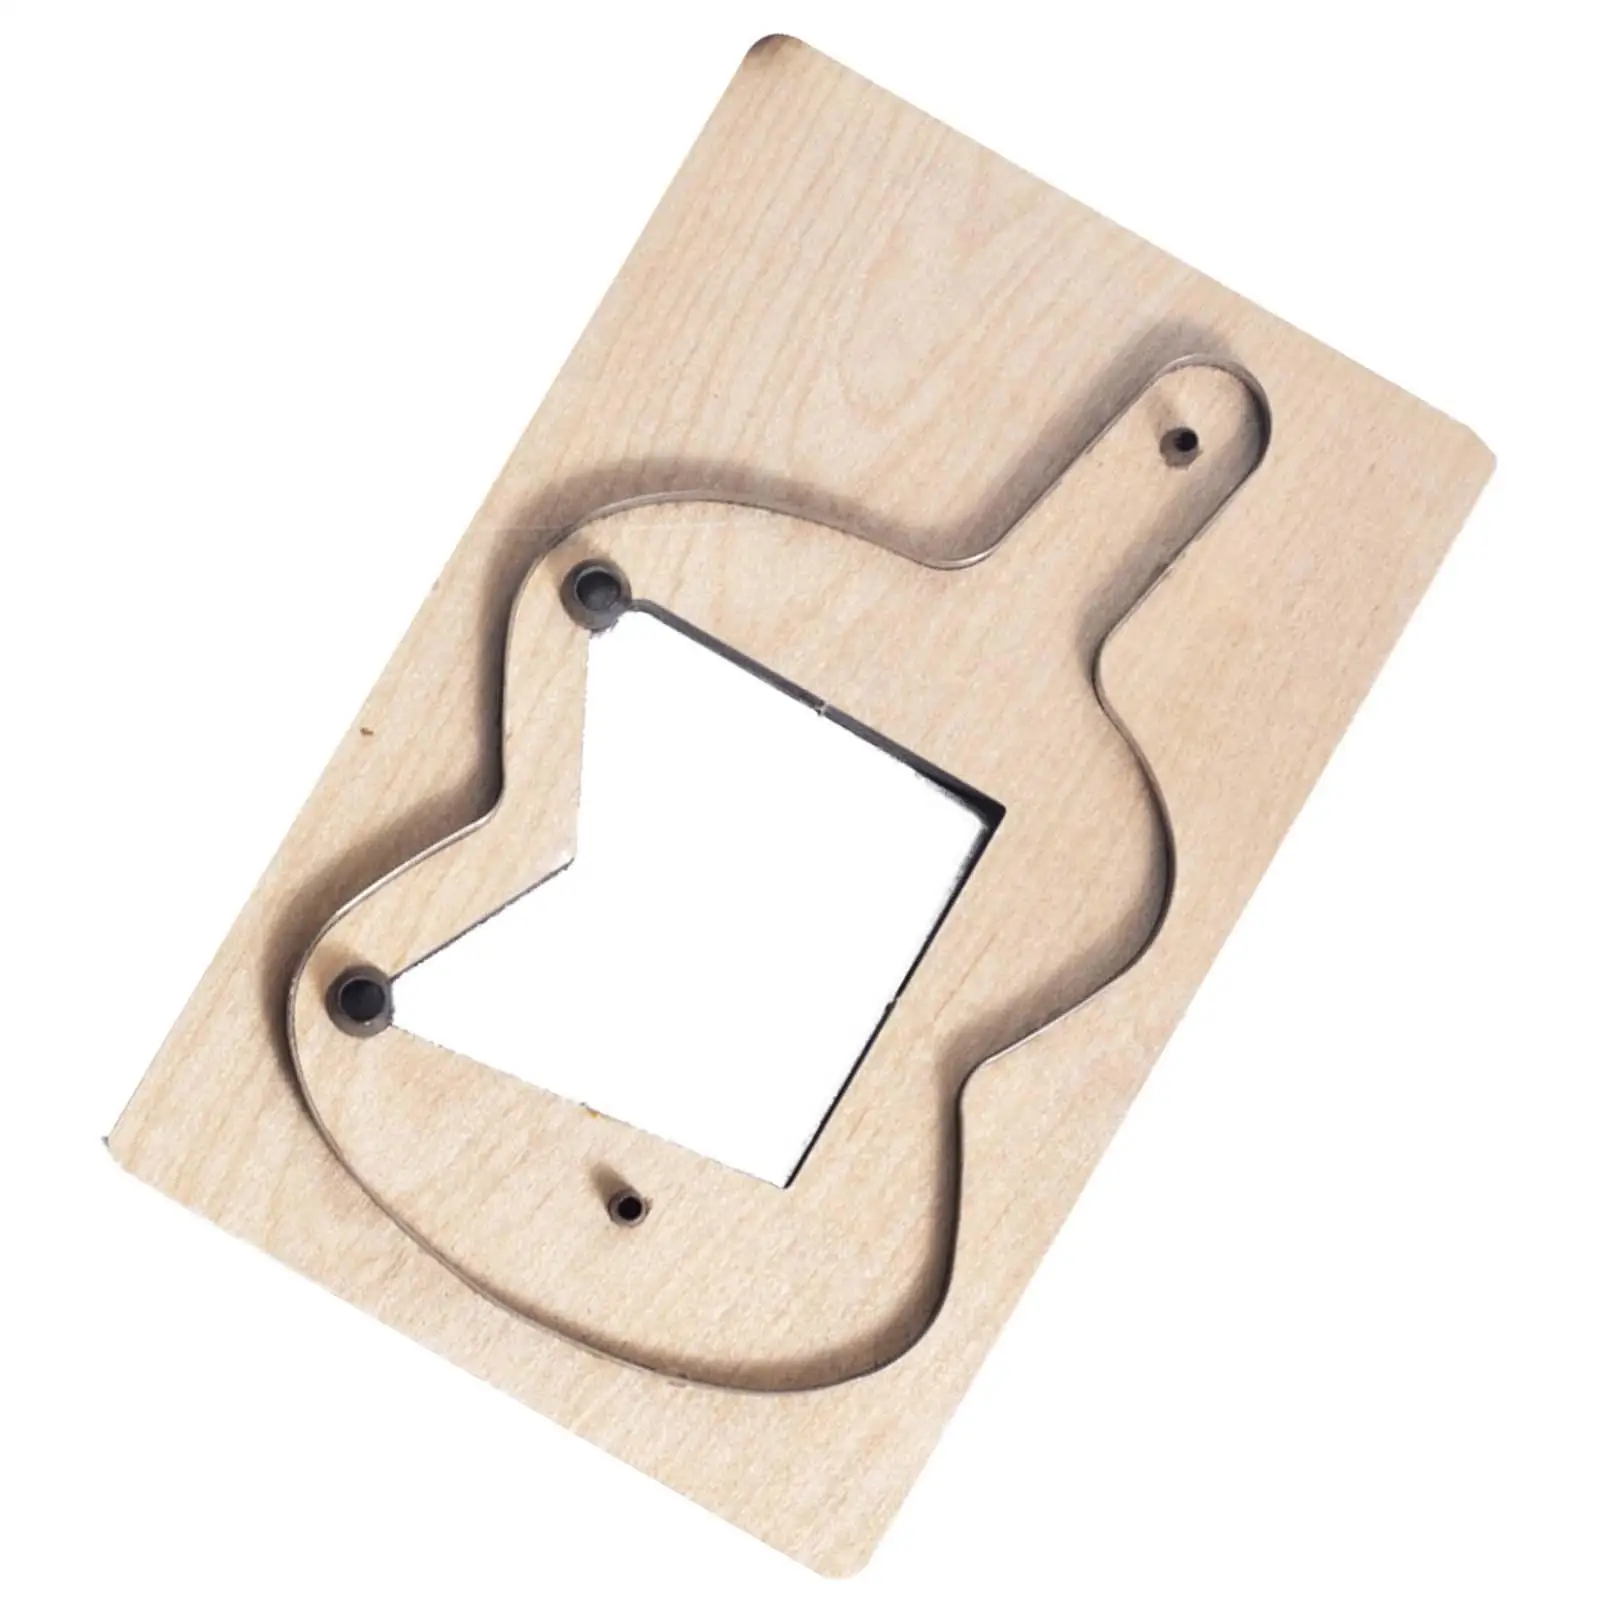 Key Sheath Wood DIY Practical Practice Leather Mini Keys Purse Making Die Cutting Stencil Leather Keys Case Template Accessories